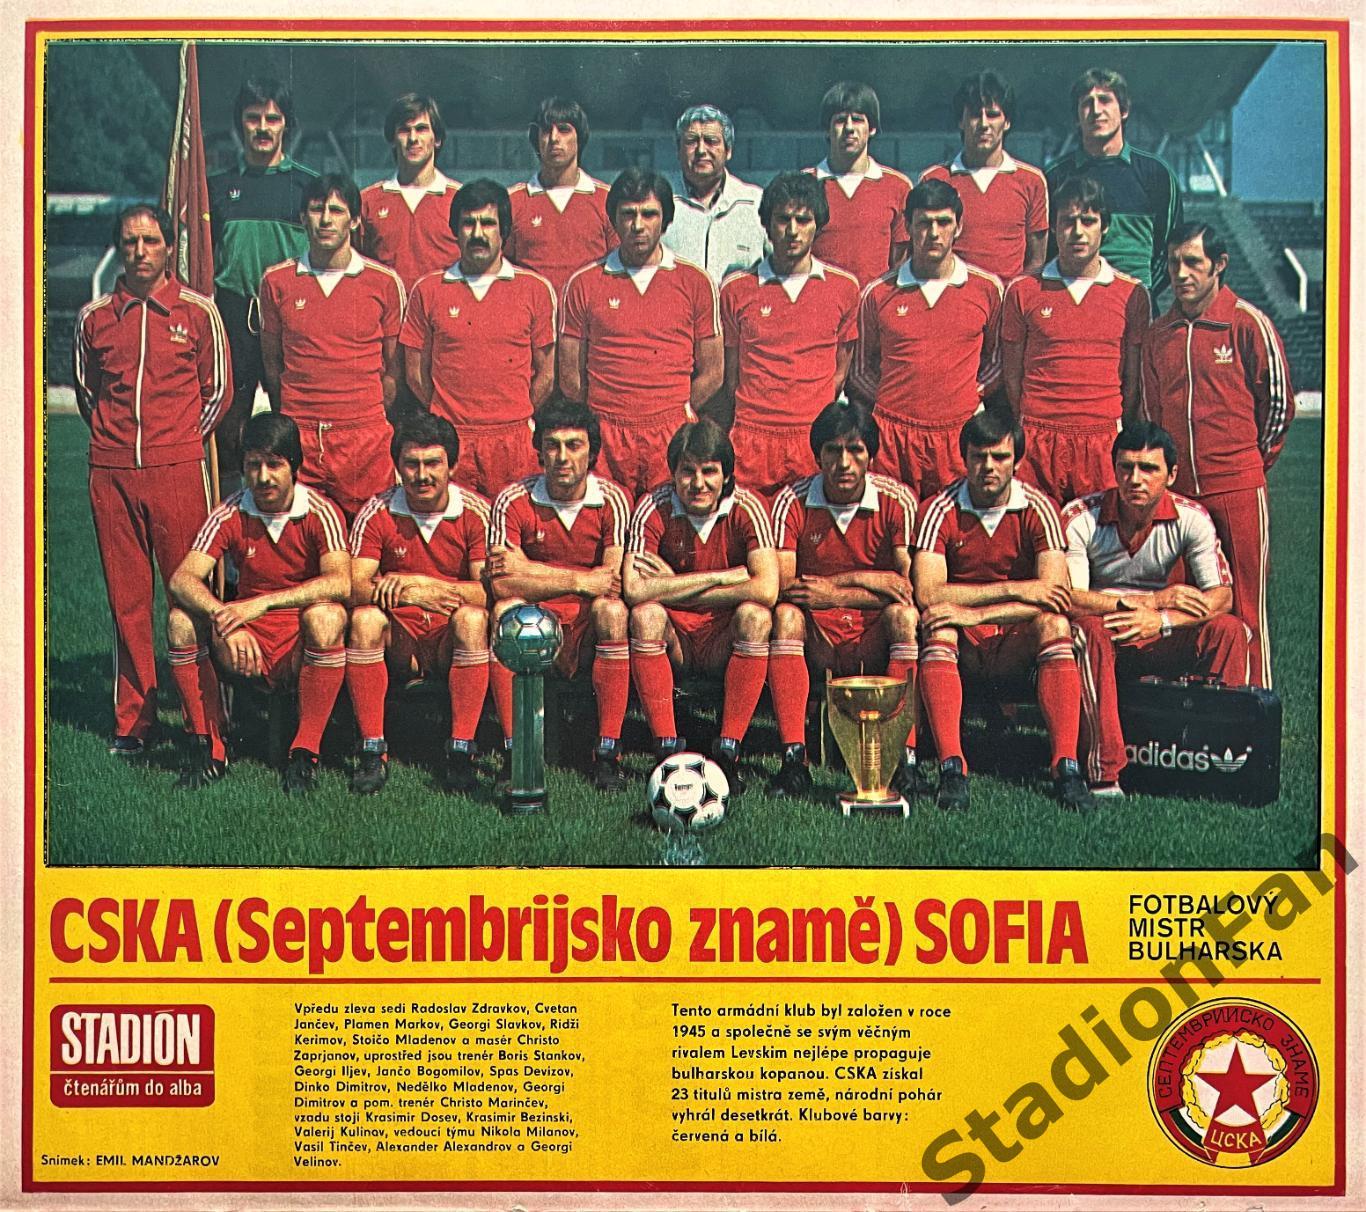 Постер из журнала Стадион (Stadion) - CSKA Sofia, 1983.